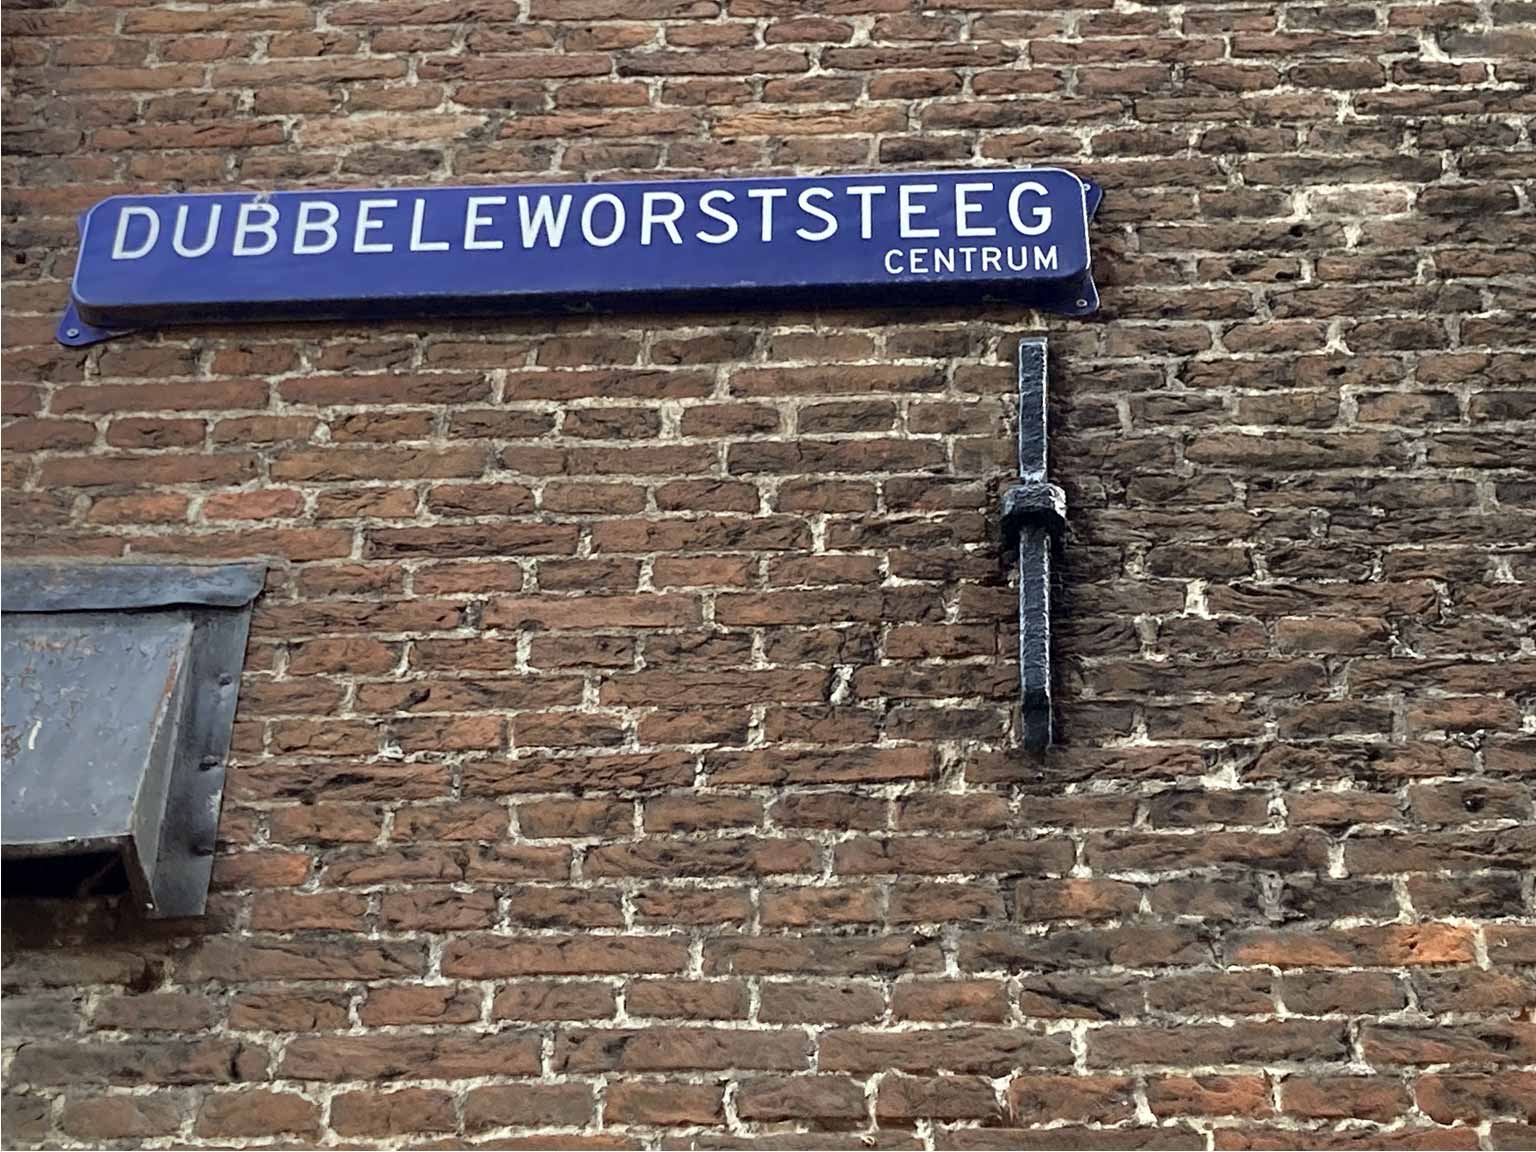 Dubbeleworststeeg, Amsterdam, streetname sign